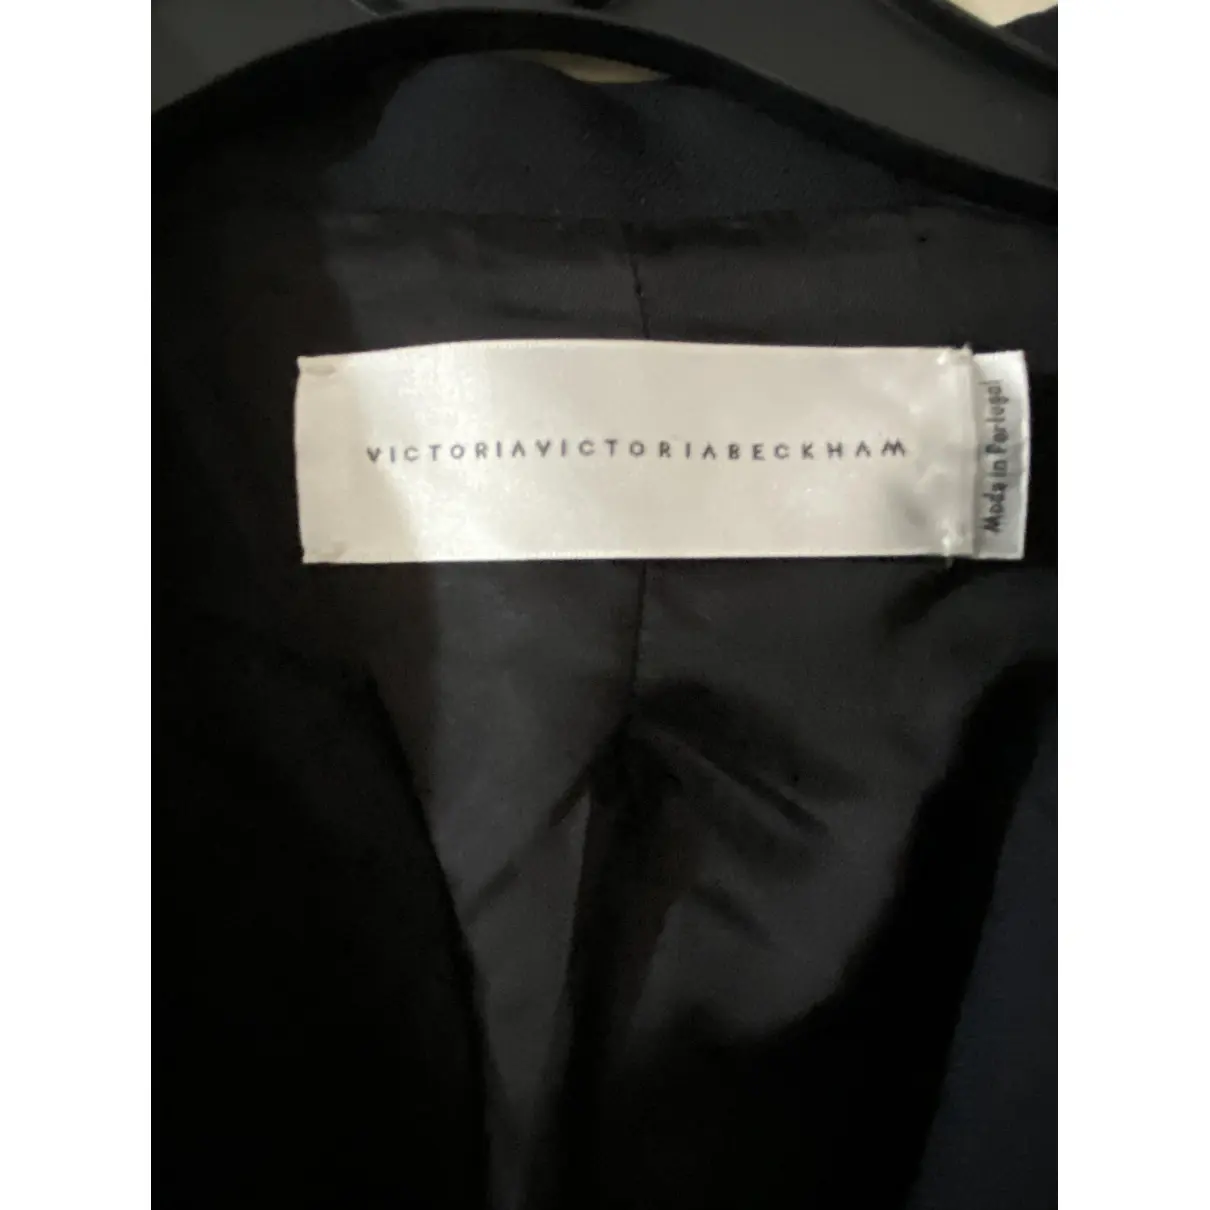 Buy Victoria, Victoria Beckham Black Polyester Jacket online